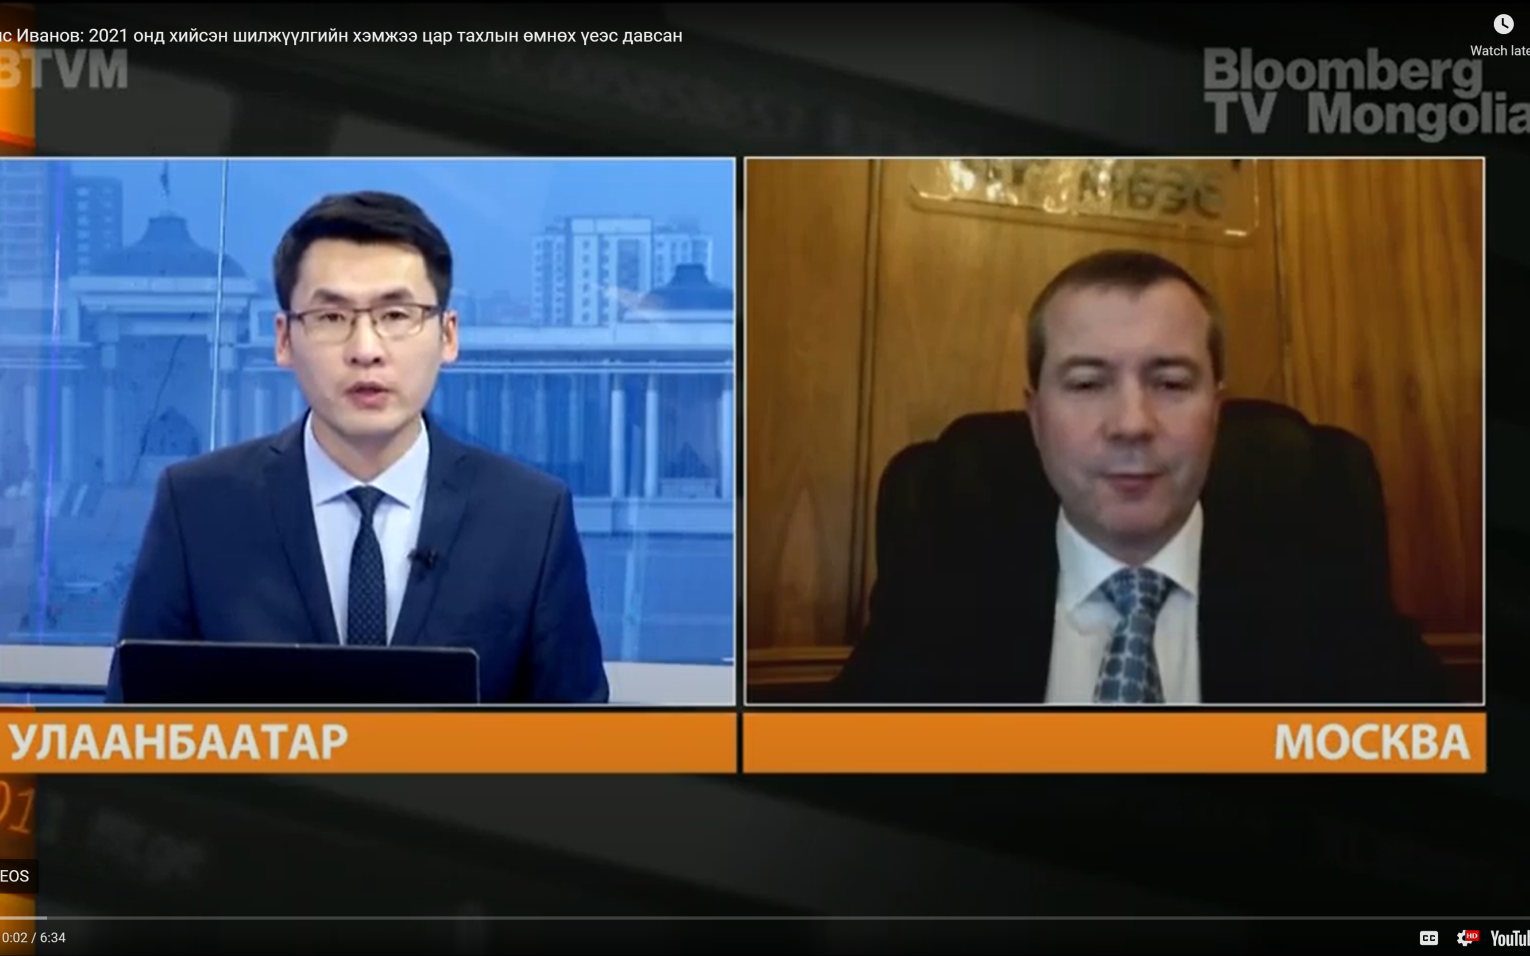 Интервью Председателя МБЭС Дениса Иванова для BloombergTV Монголия